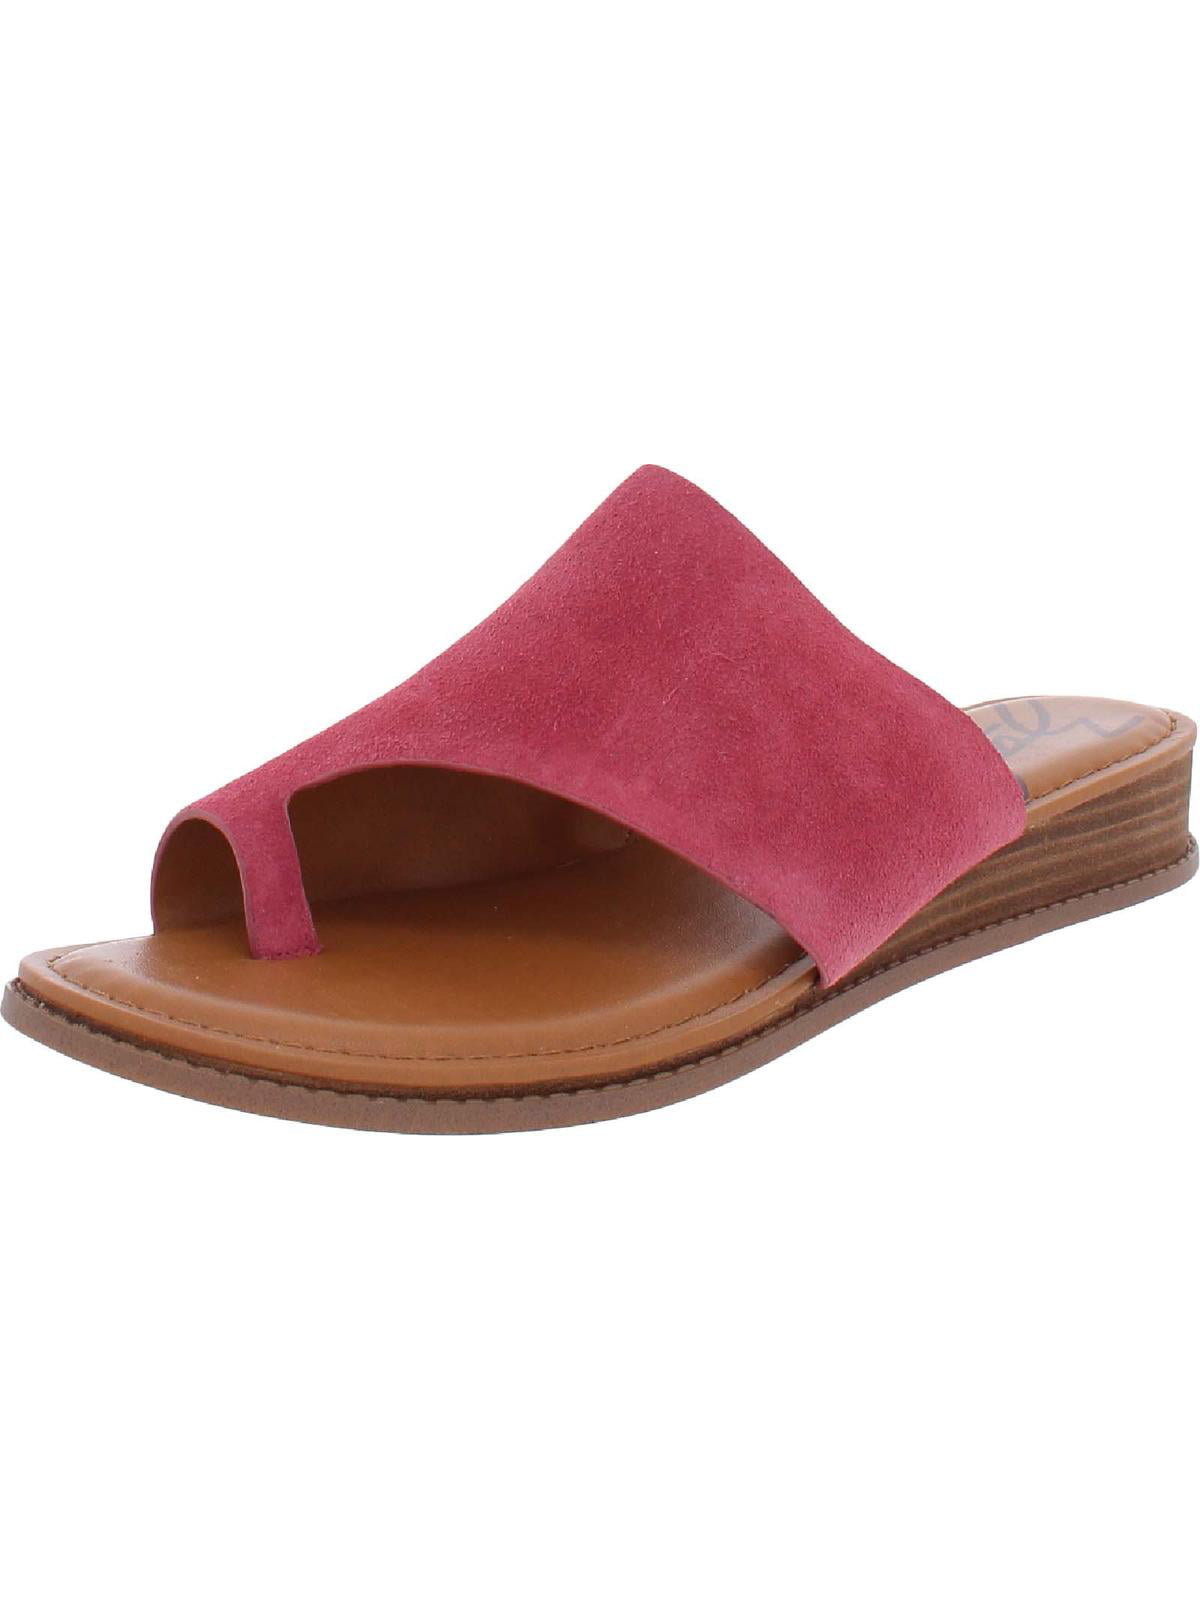 Zodiac Womens Giada Suede Slip On Slide Sandals - Walmart.com